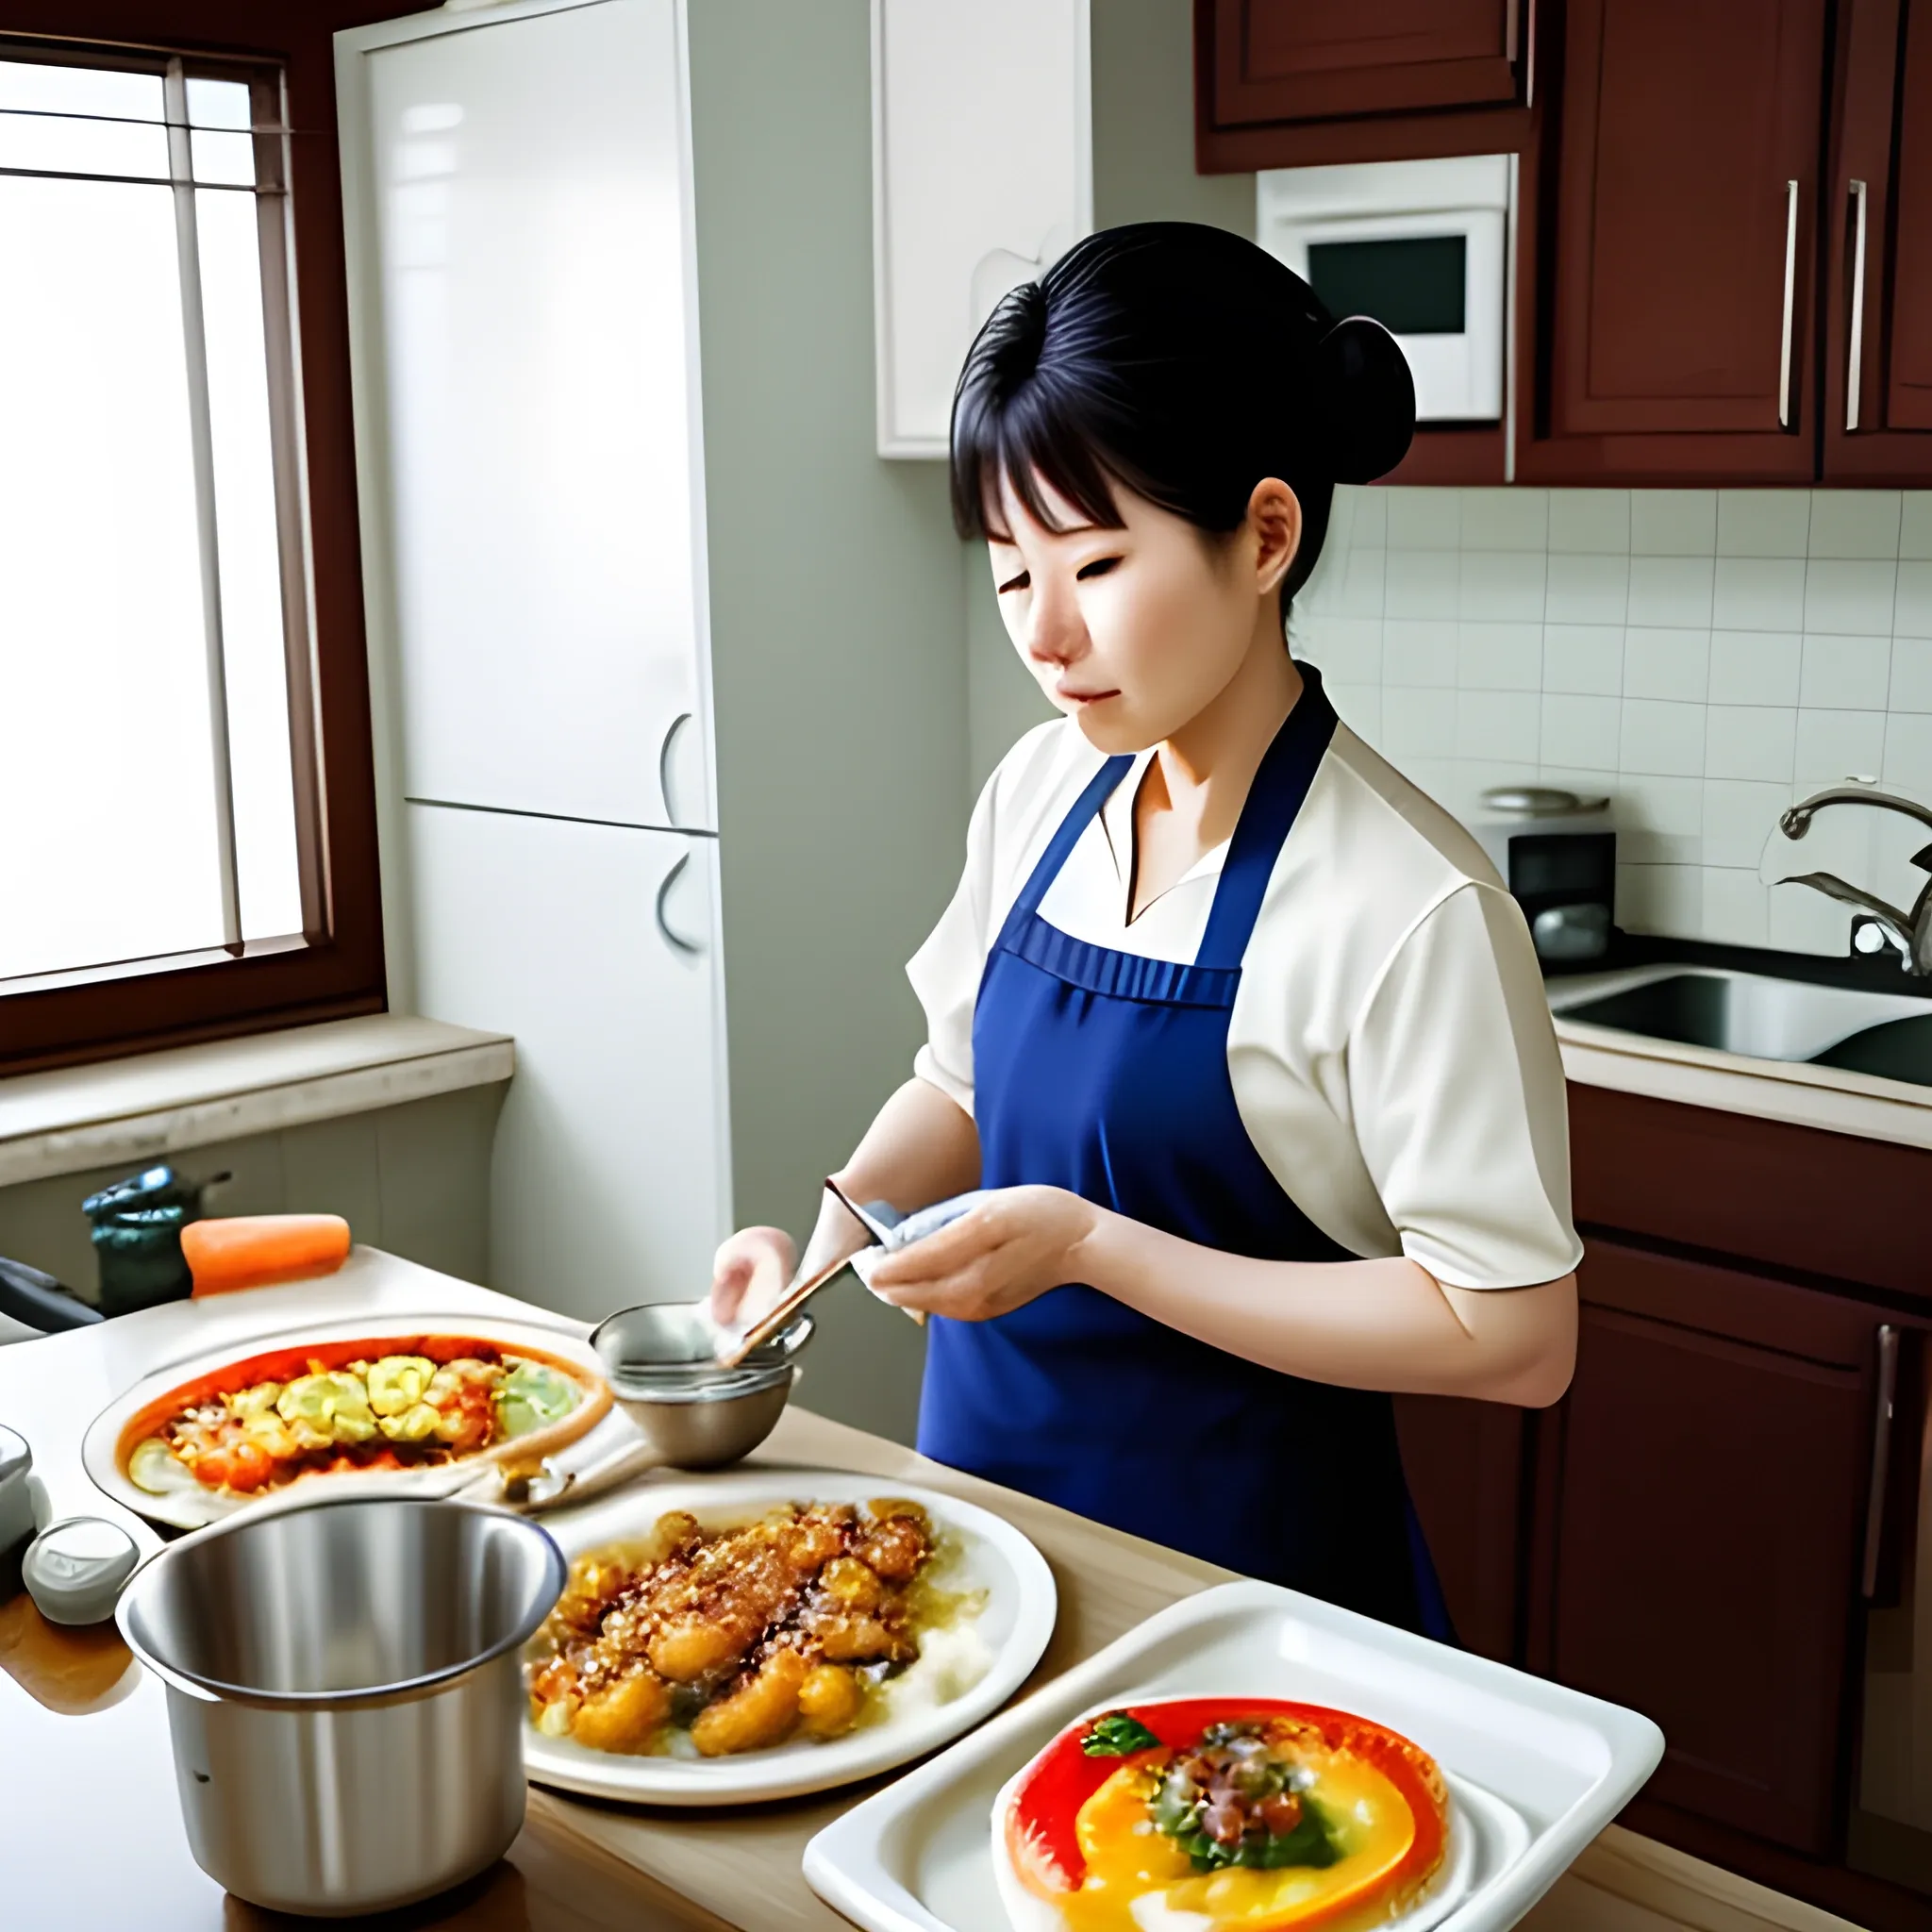  a Korean homemaker  prepares breakfast at the kitchen